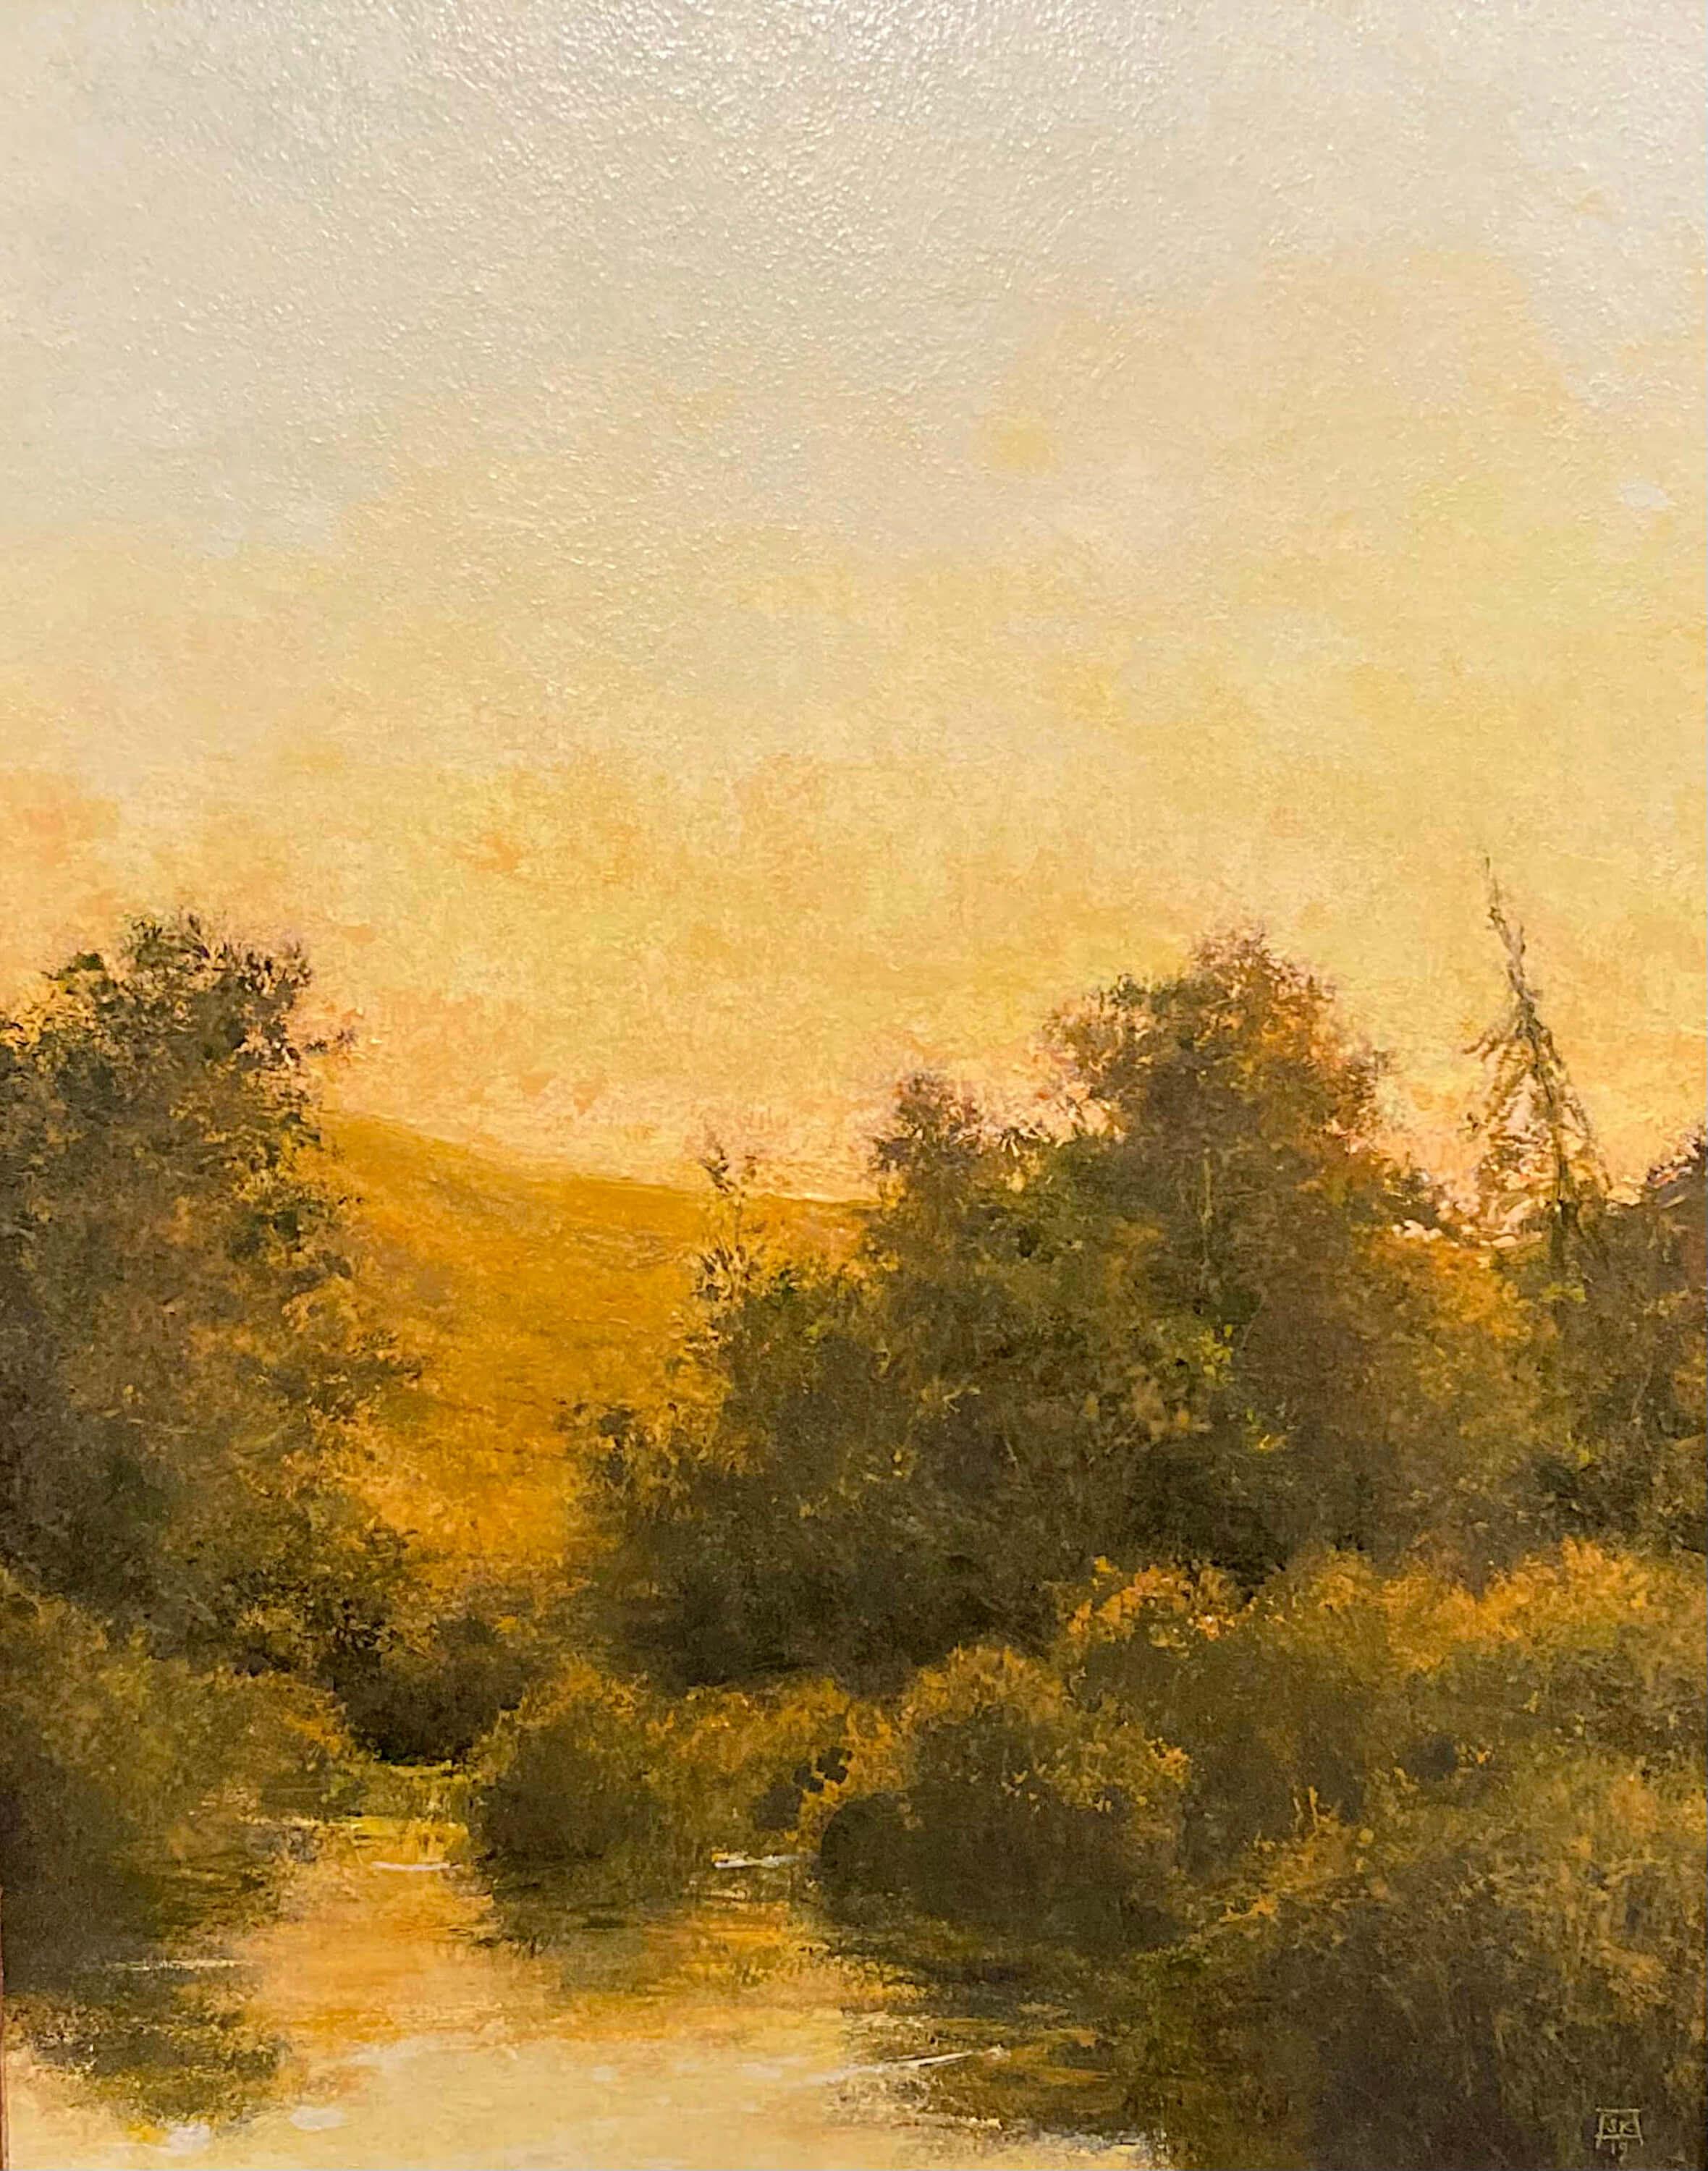 Shawn Krueger Figurative Painting - The Last Sunset, Original Oil Painting